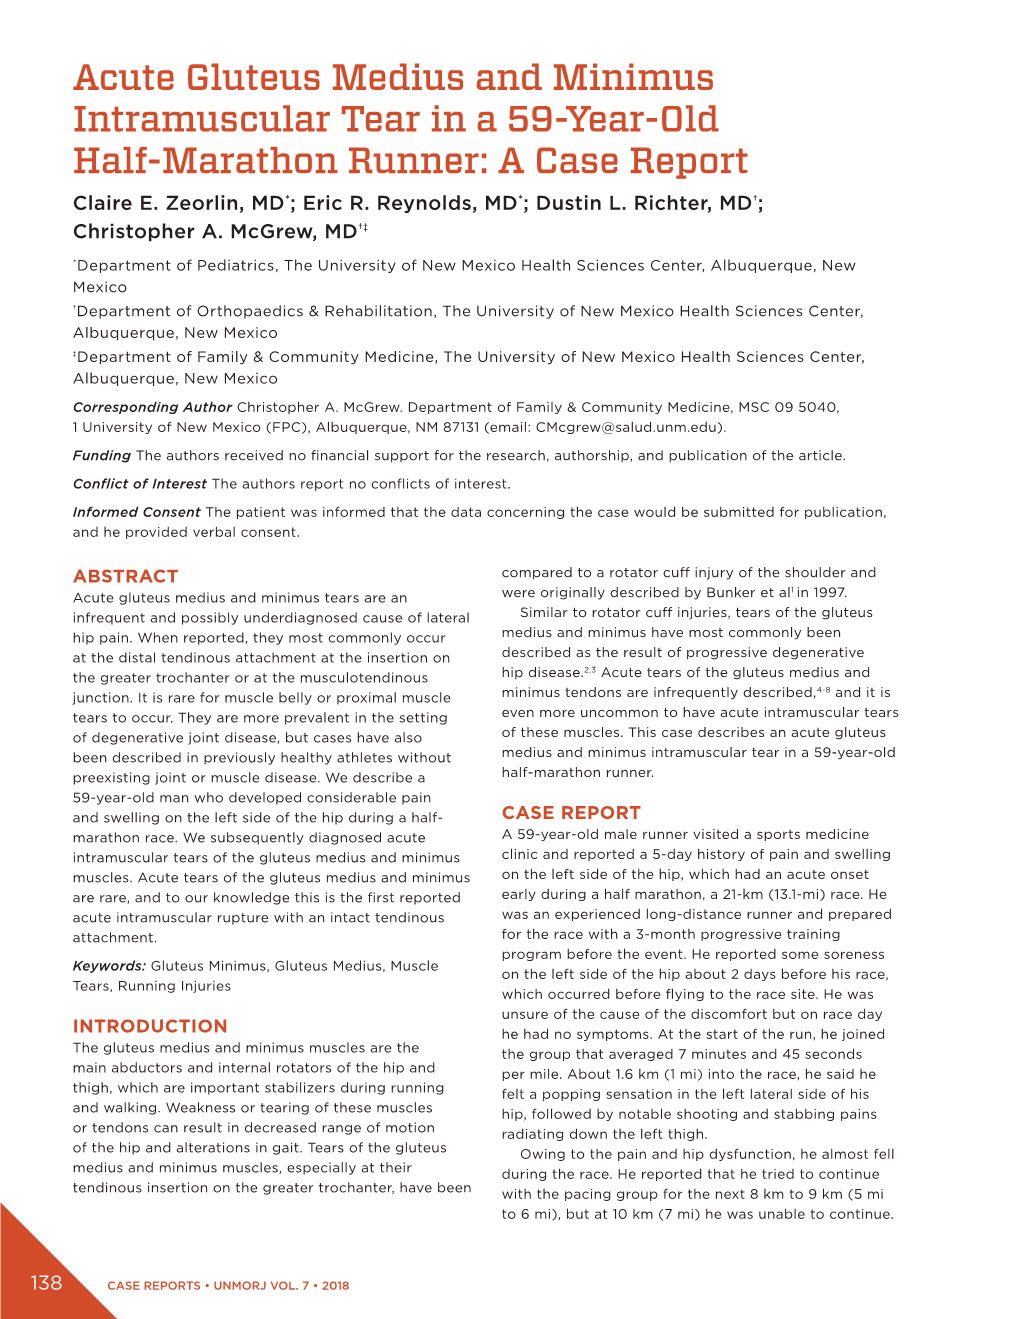 Acute Gluteus Medius and Minimus Intramuscular Tear in a 59-Year-Old Half-Marathon Runner: a Case Report Claire E